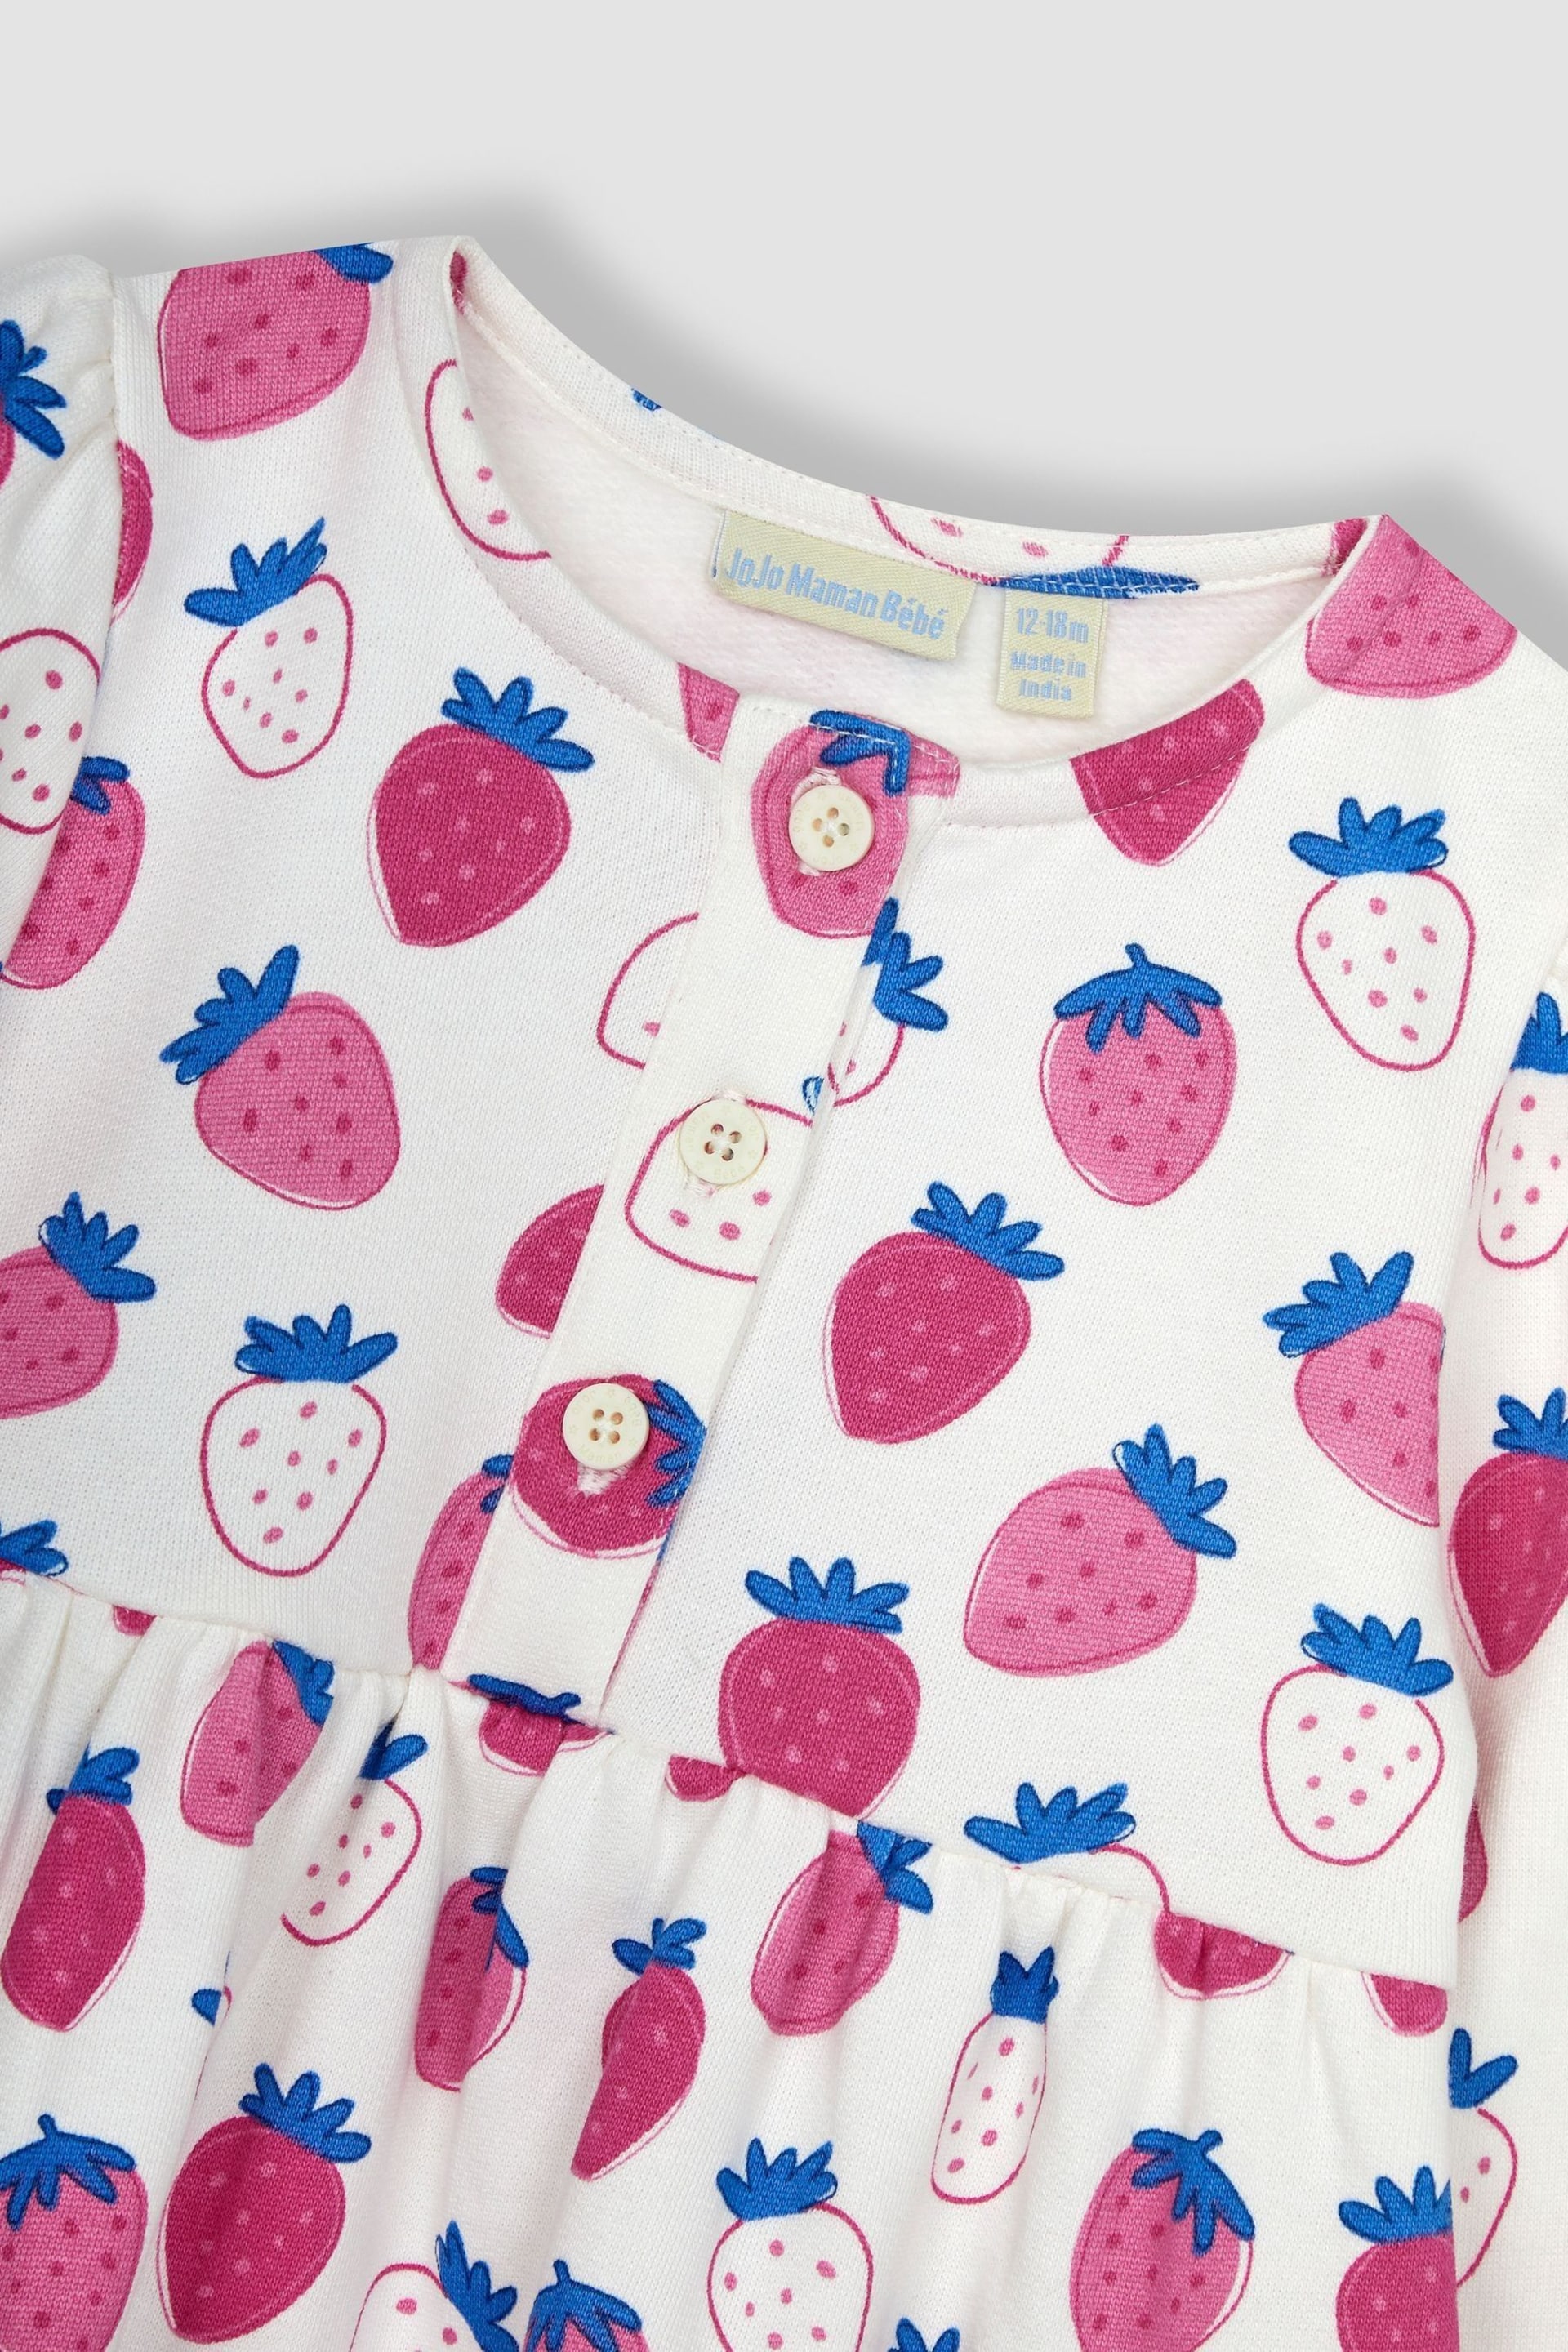 JoJo Maman Bébé Pink Strawberry Button Front Sweat Jersey Dress - Image 2 of 3